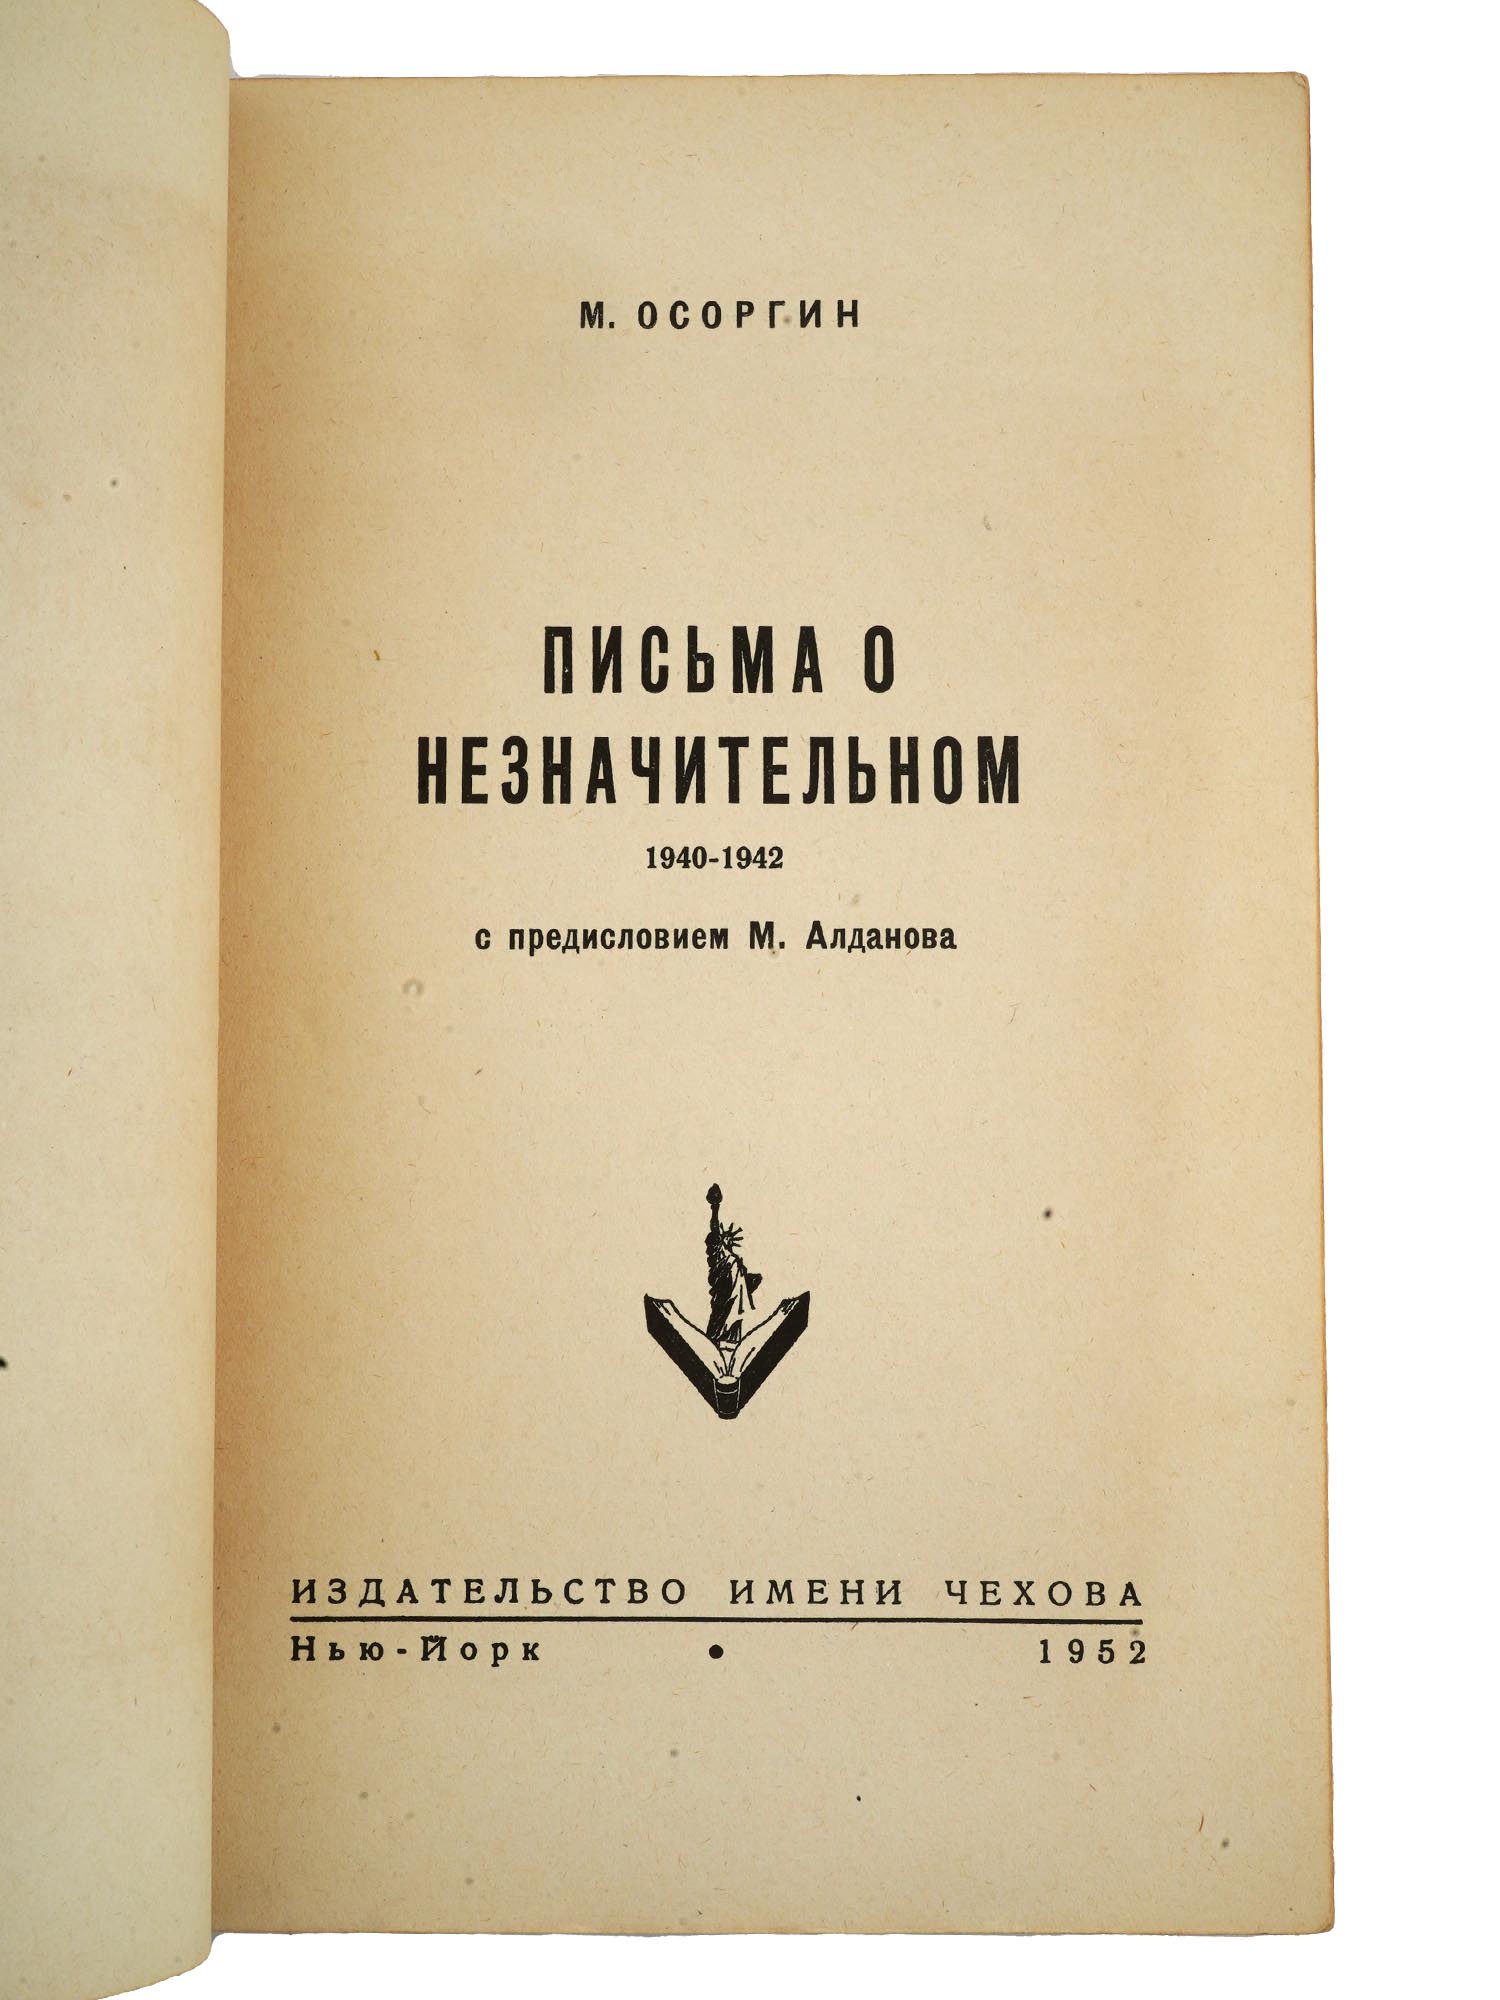 RUSSIAN EMIGRE MEMOIR BOOKS CHEKHOV PUBLISHING HOUSE PIC-3